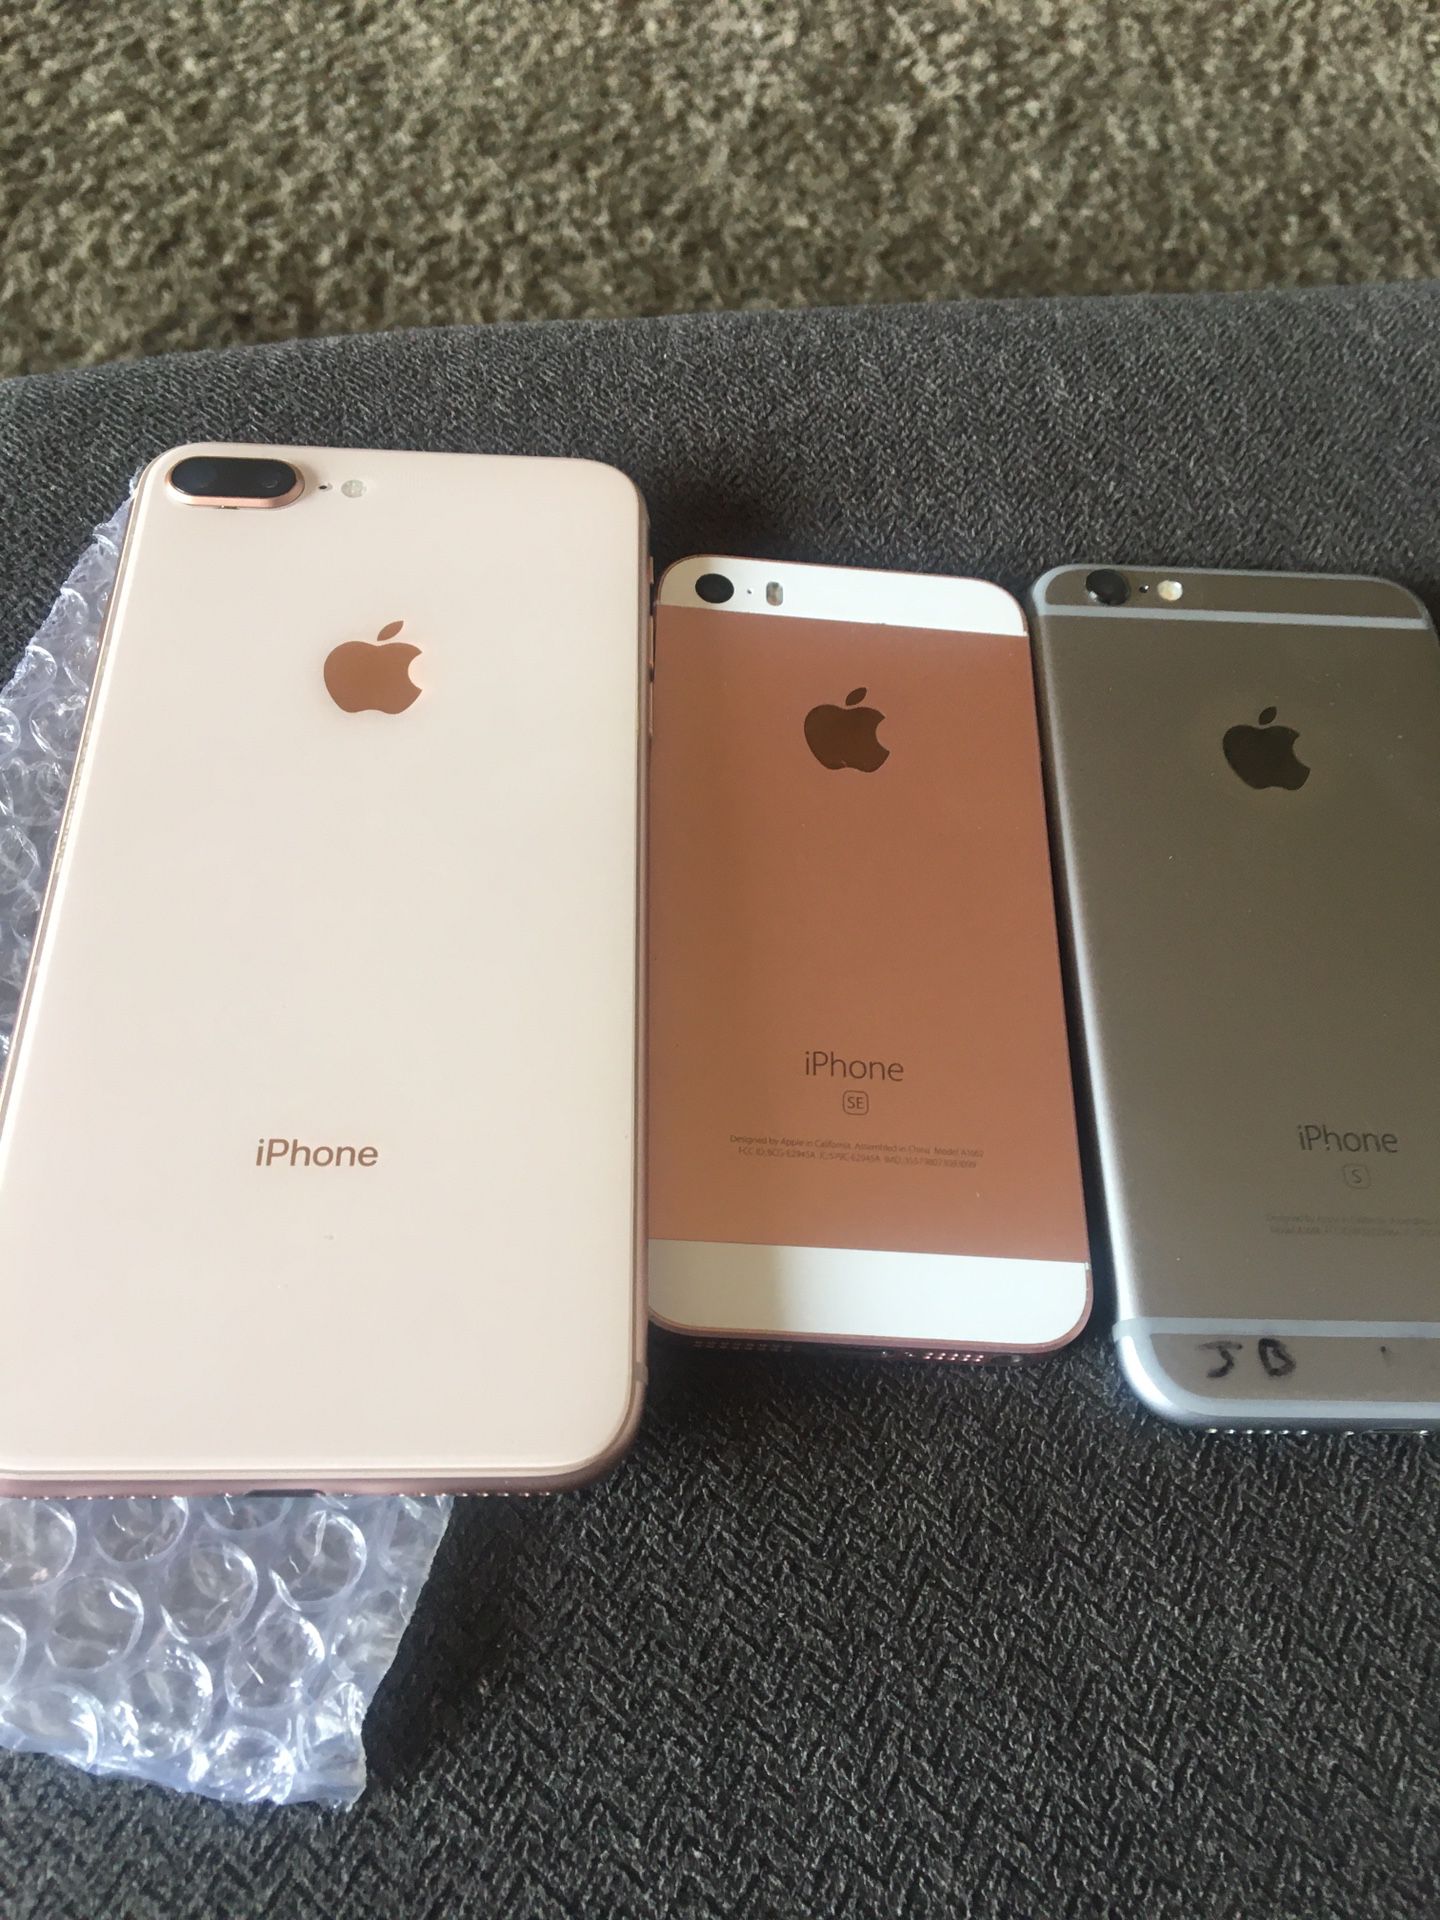 iPhone 5se 6s 7/8plus Unlocked $159-$400